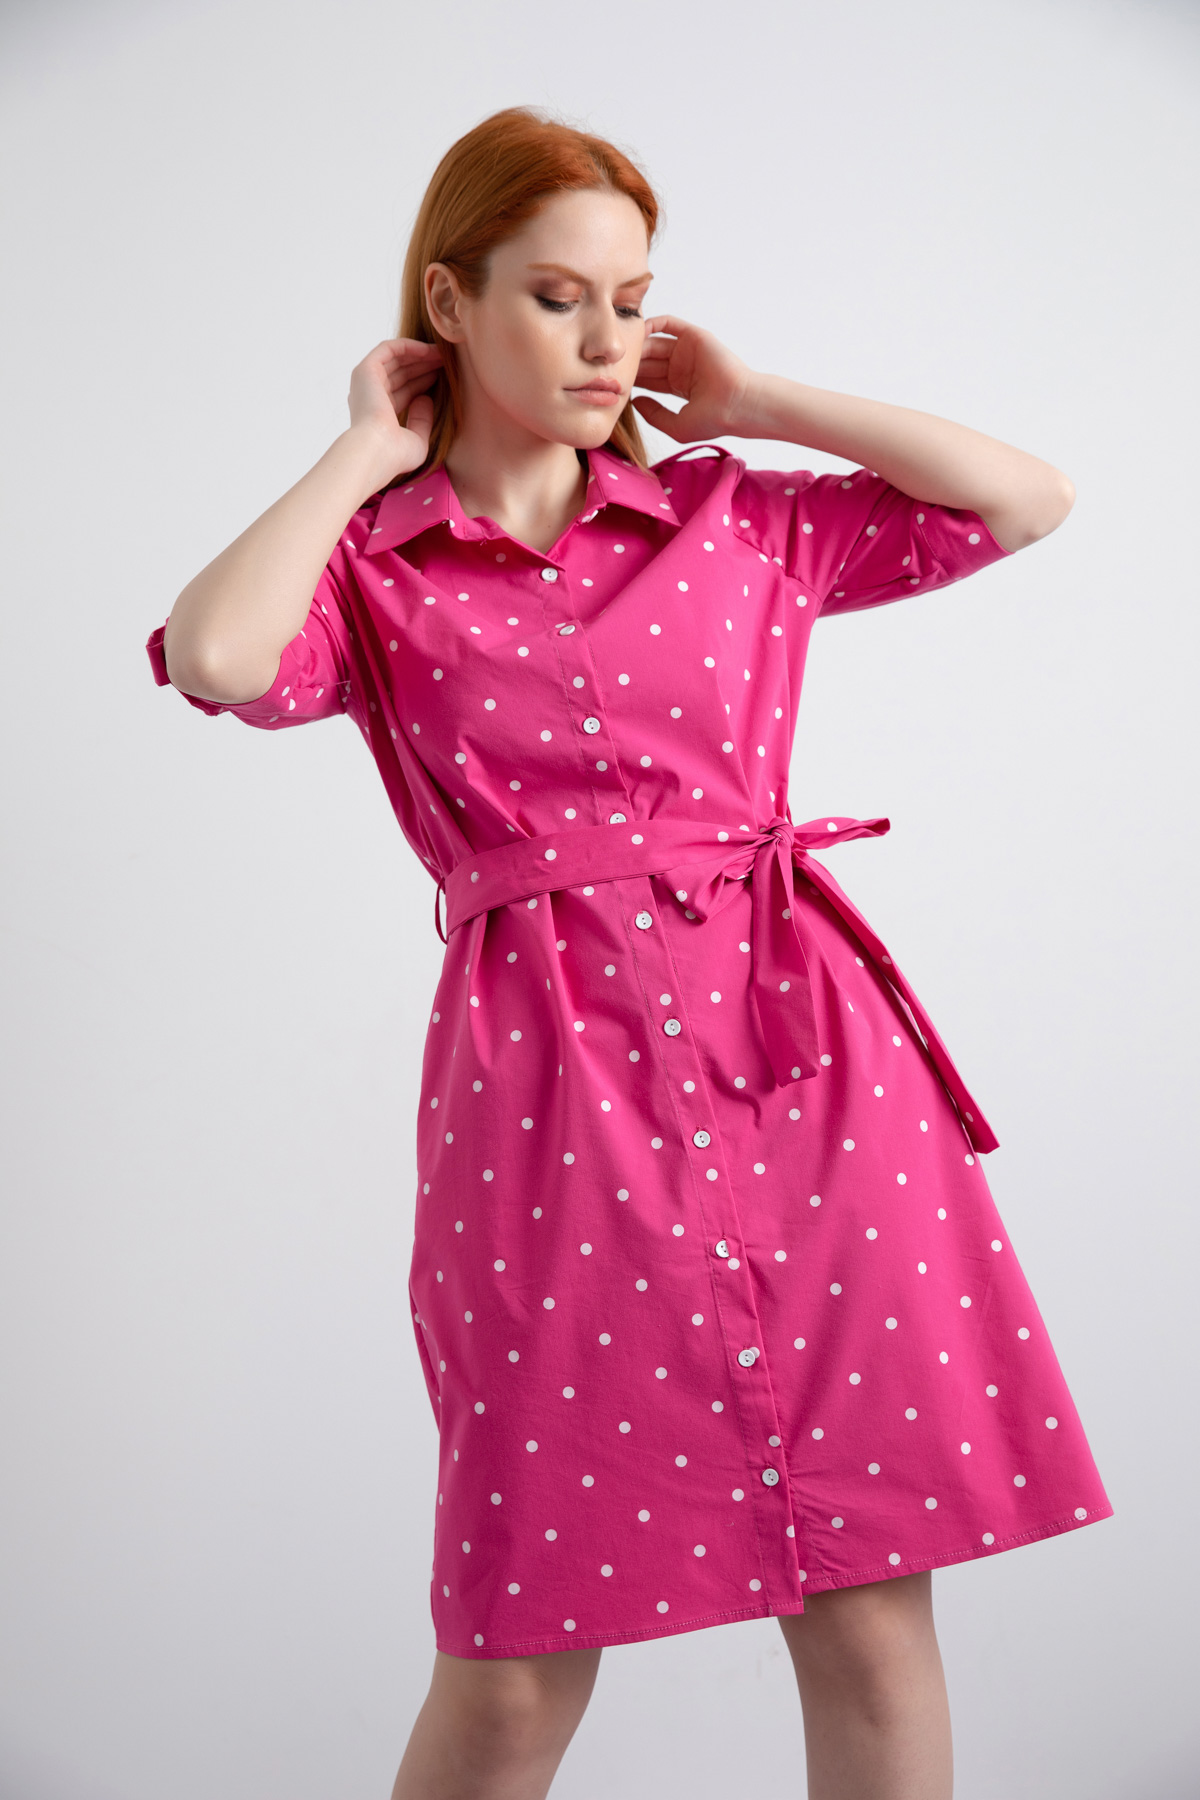 Women's Fuchsia Polka Dot Patterned Dress